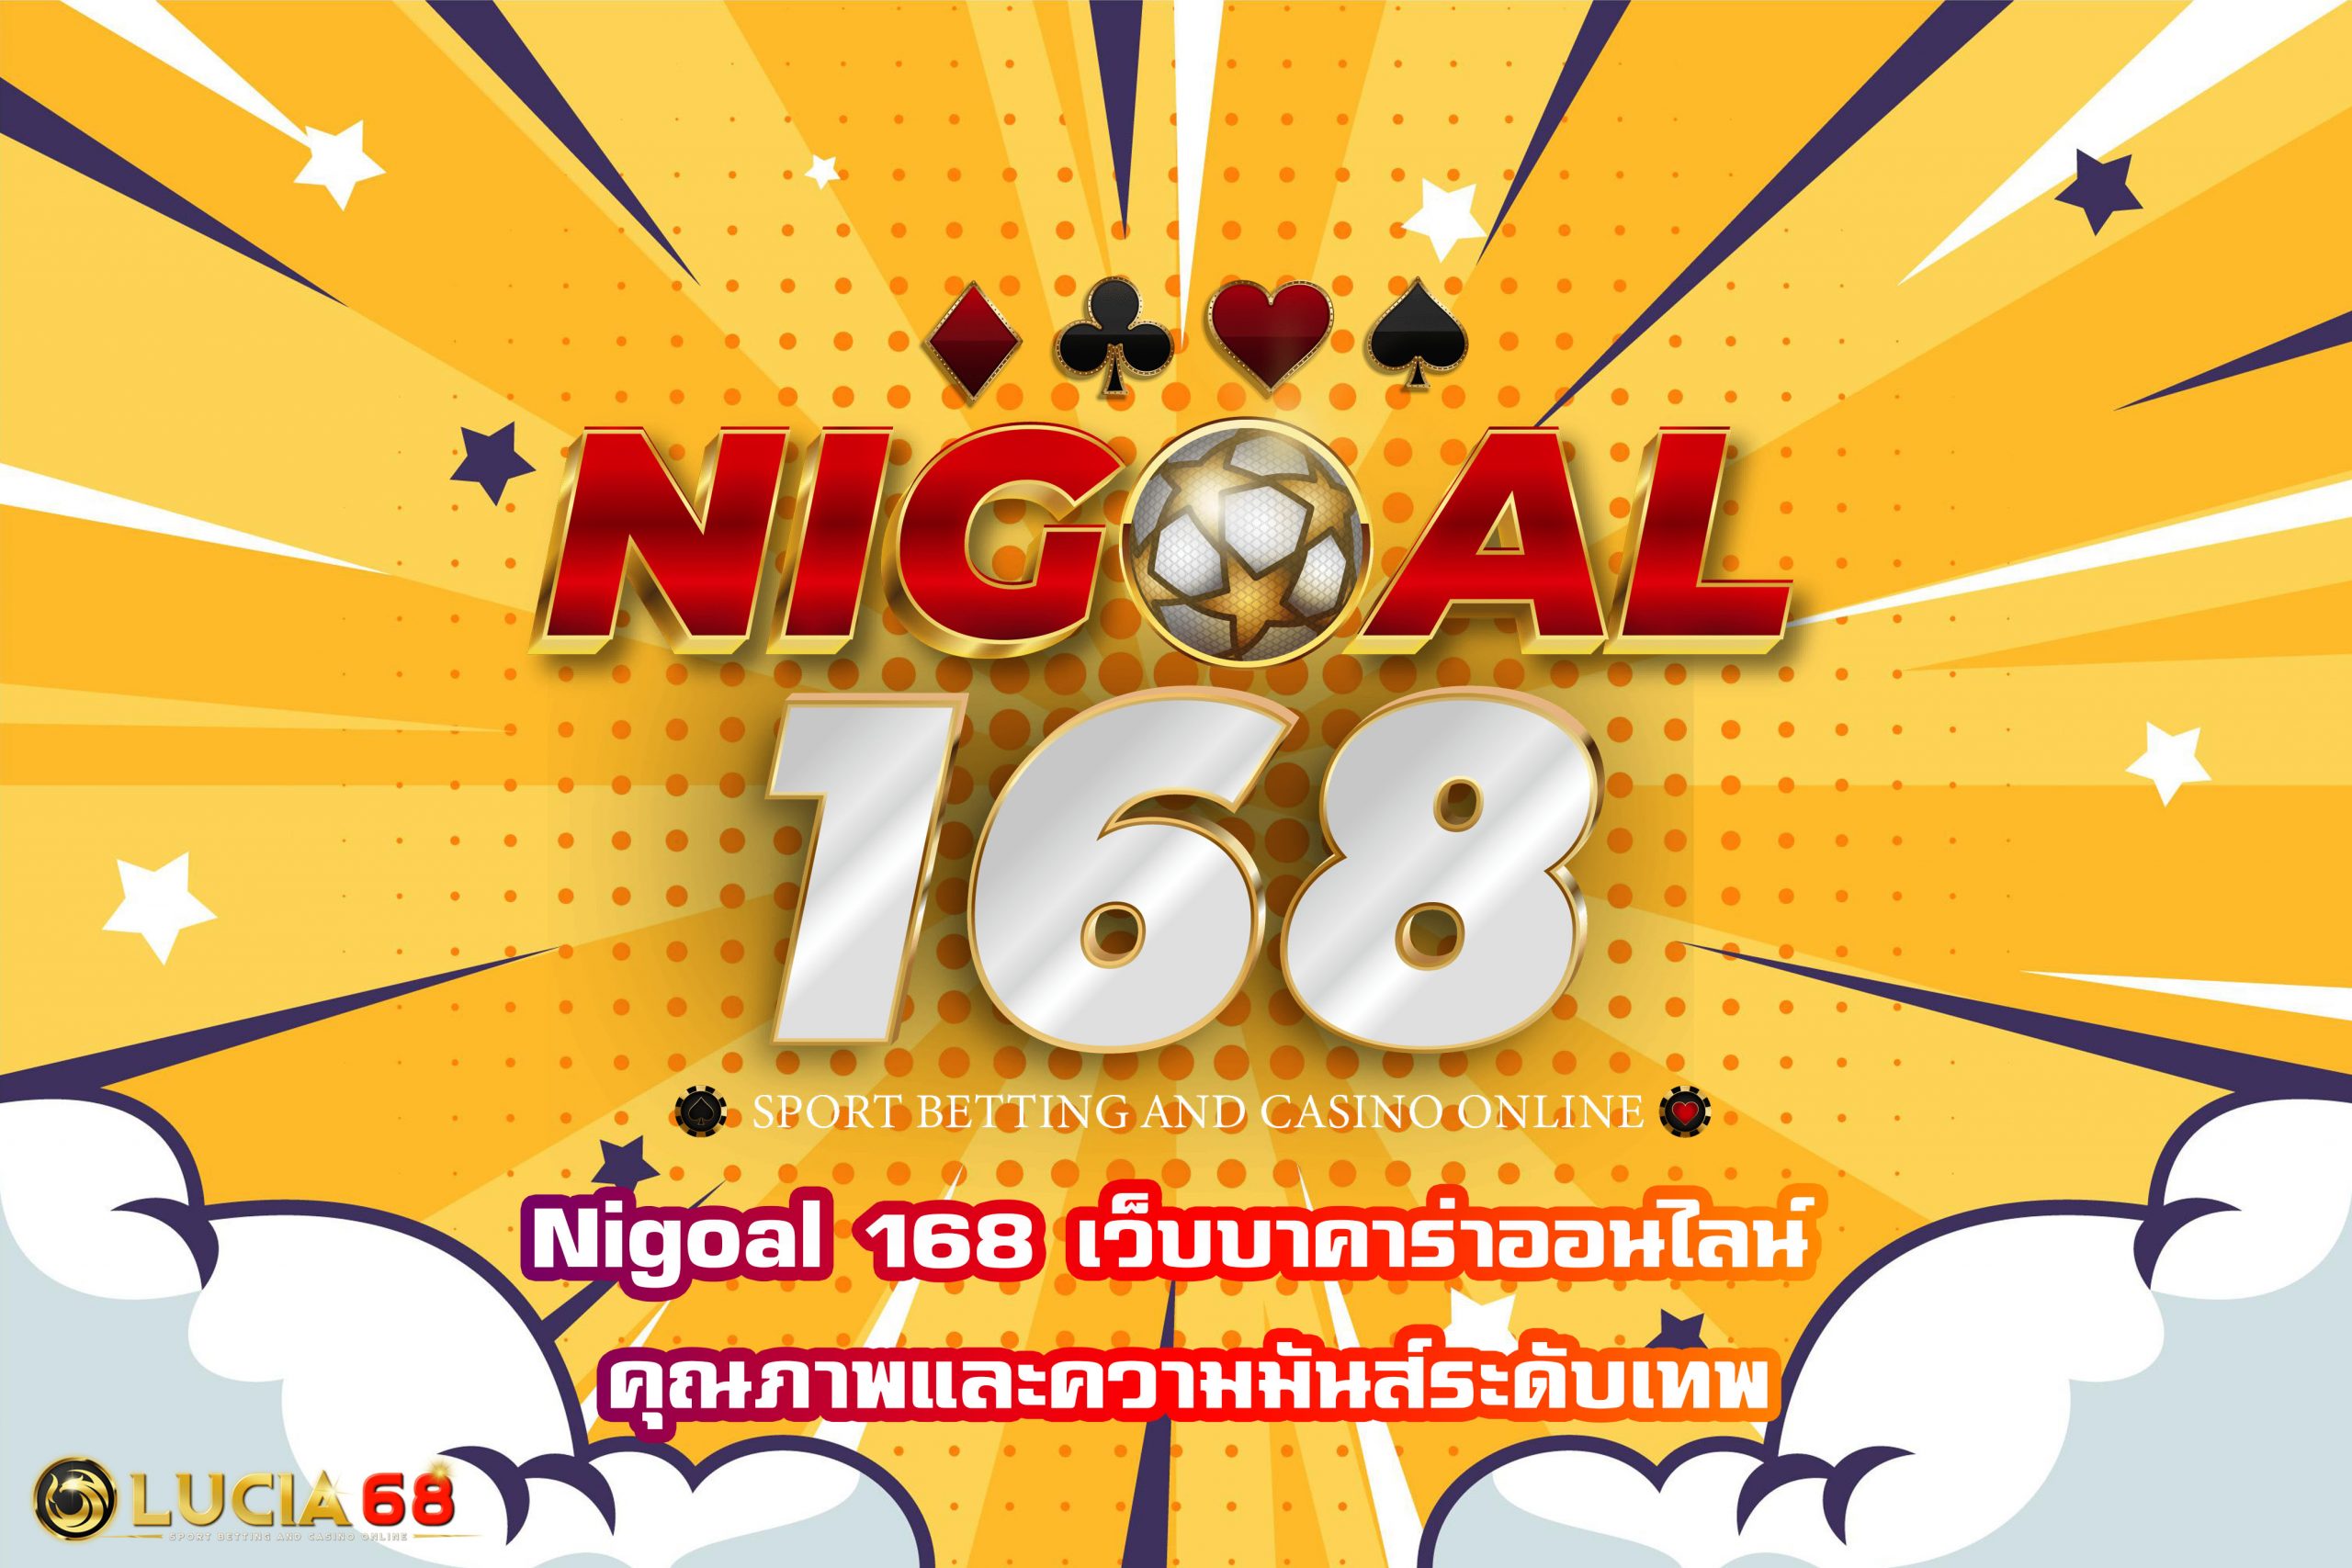 Nigoal 168 เว็บบาคาร่าออนไลน์ คุณภาพและความมันส์ระดับเทพ